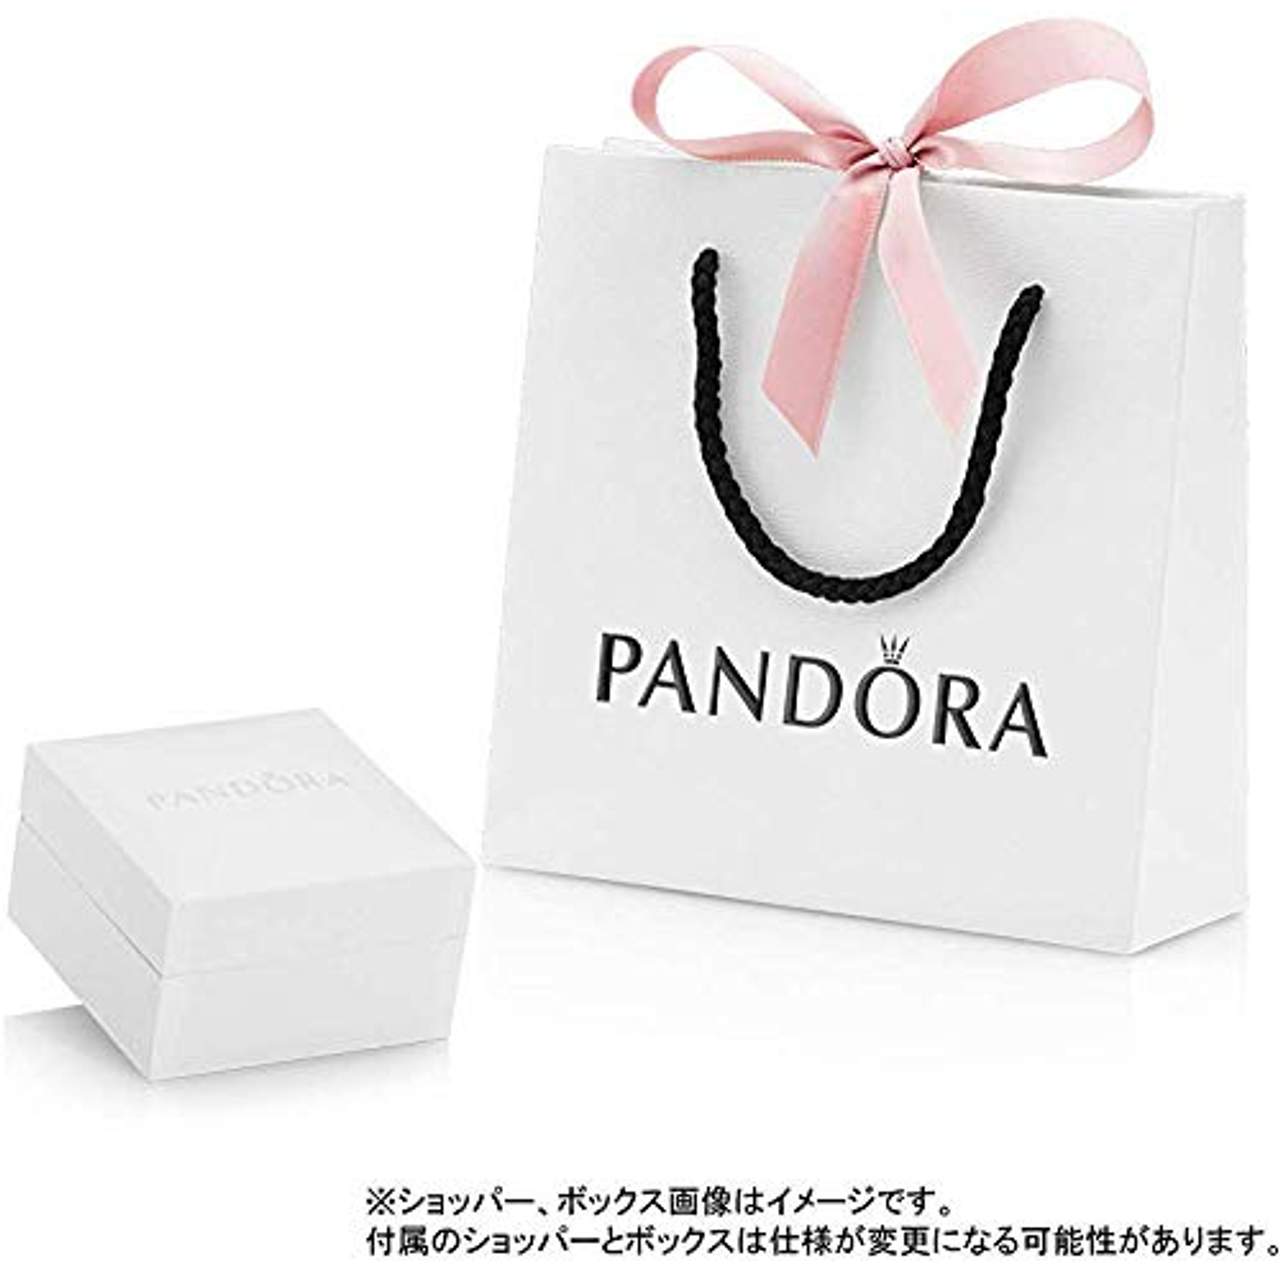 Pandora -Bead Charms 925_Sterling_Silber 